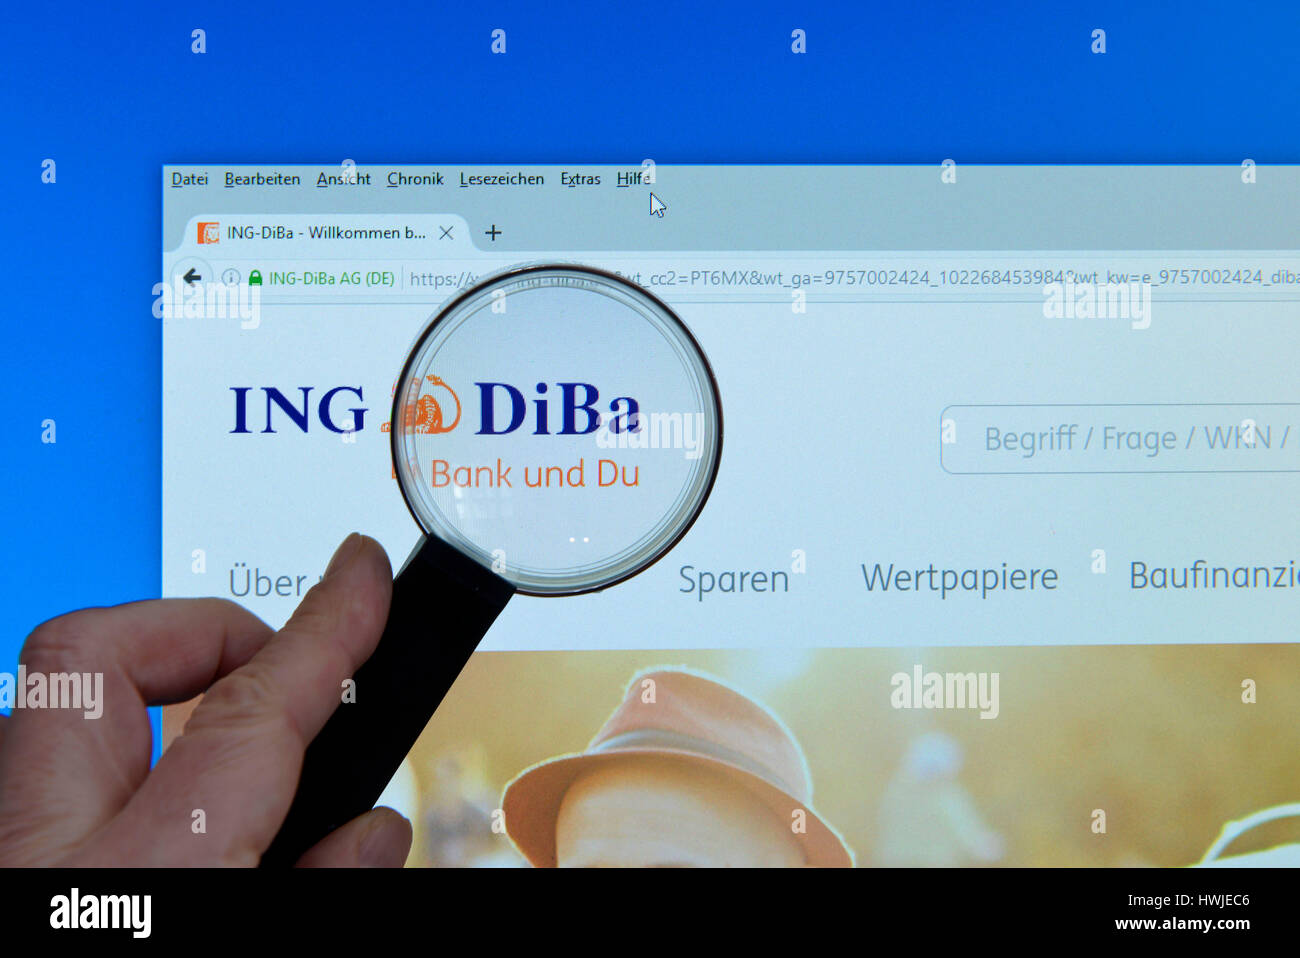 ING Diba, Website, Internet, Bildschirm, Lupe, Hand Stock Photo